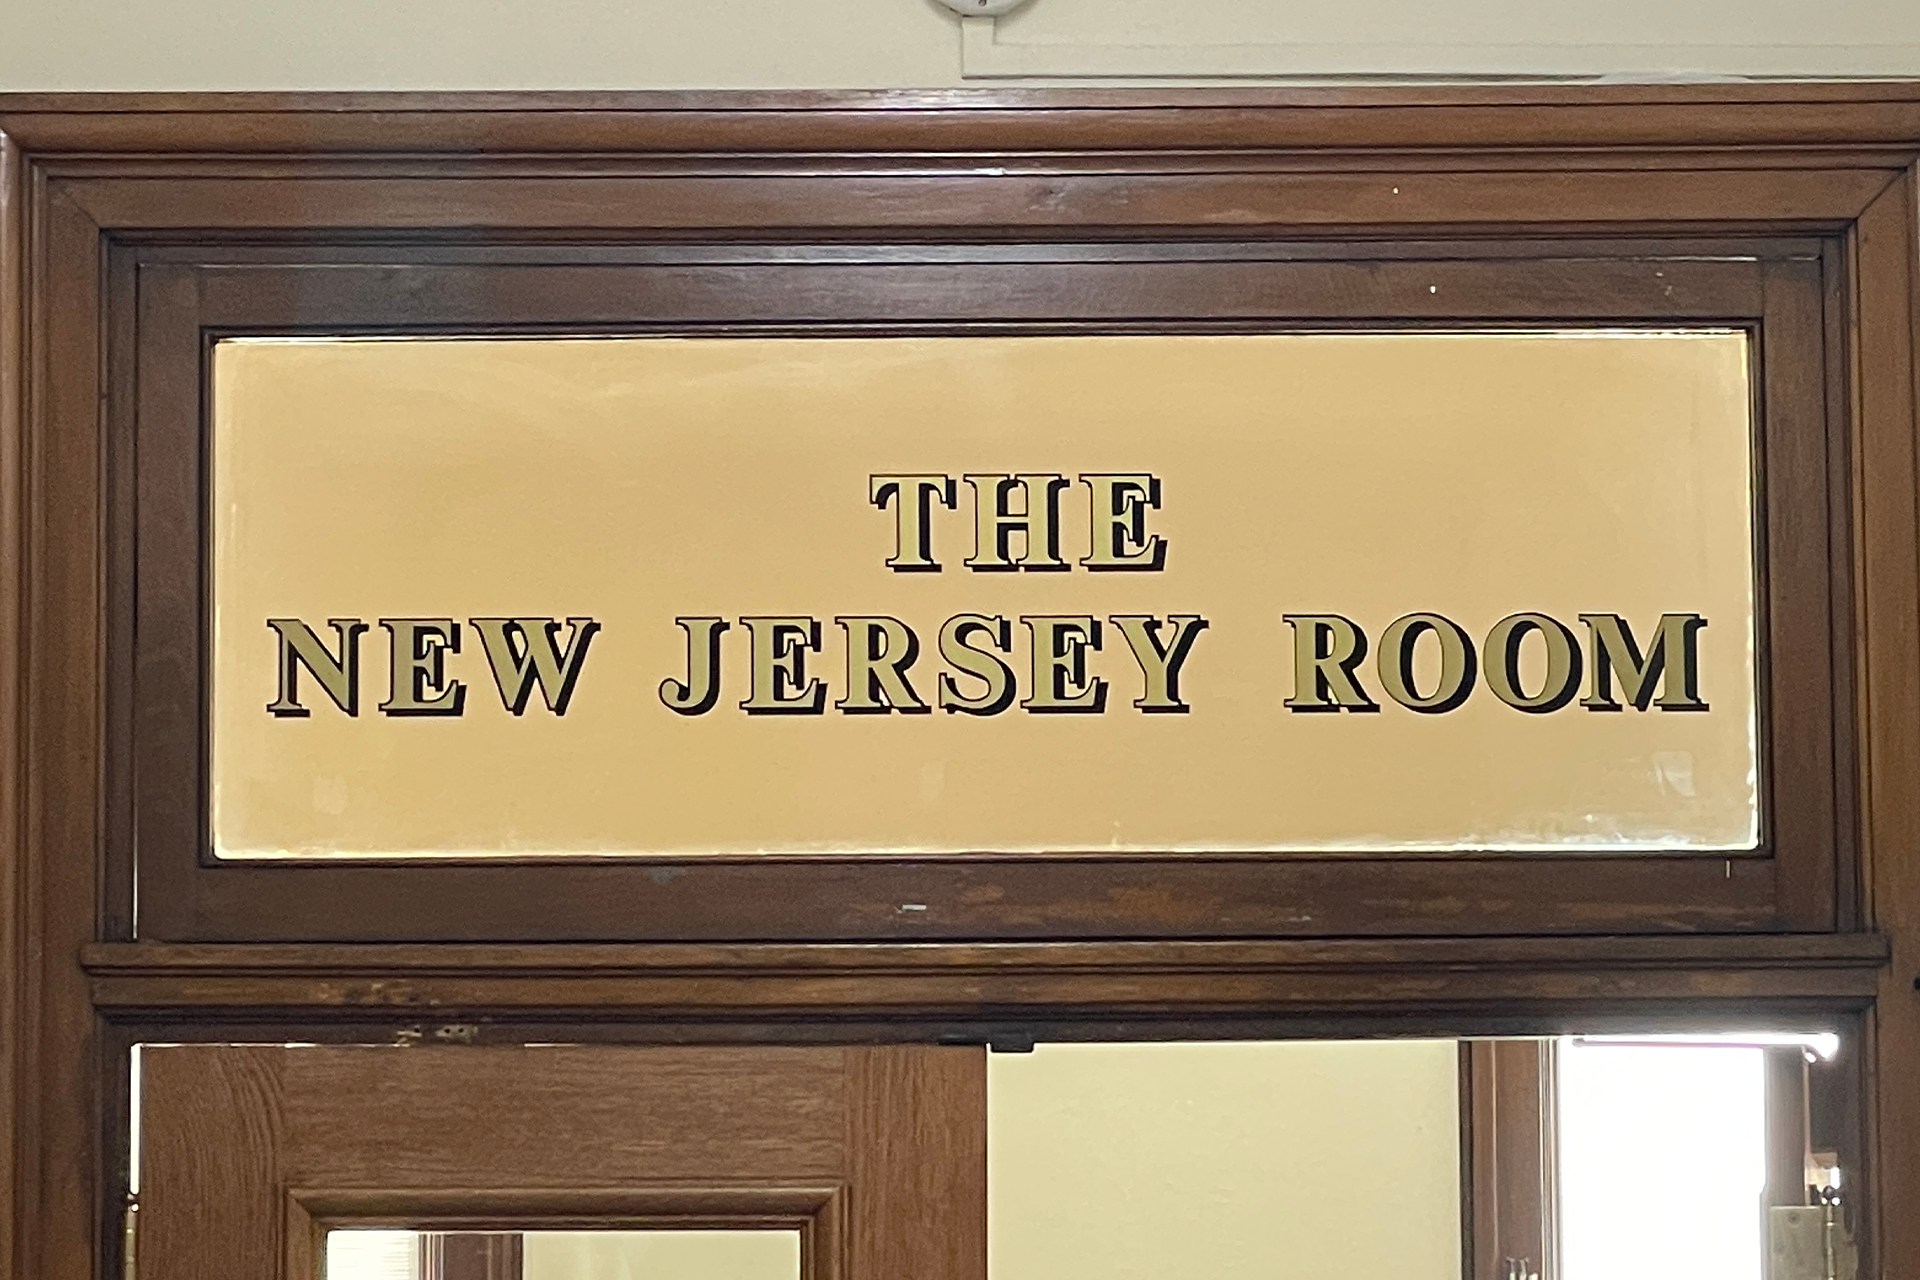 JCFPL New Jersey Room